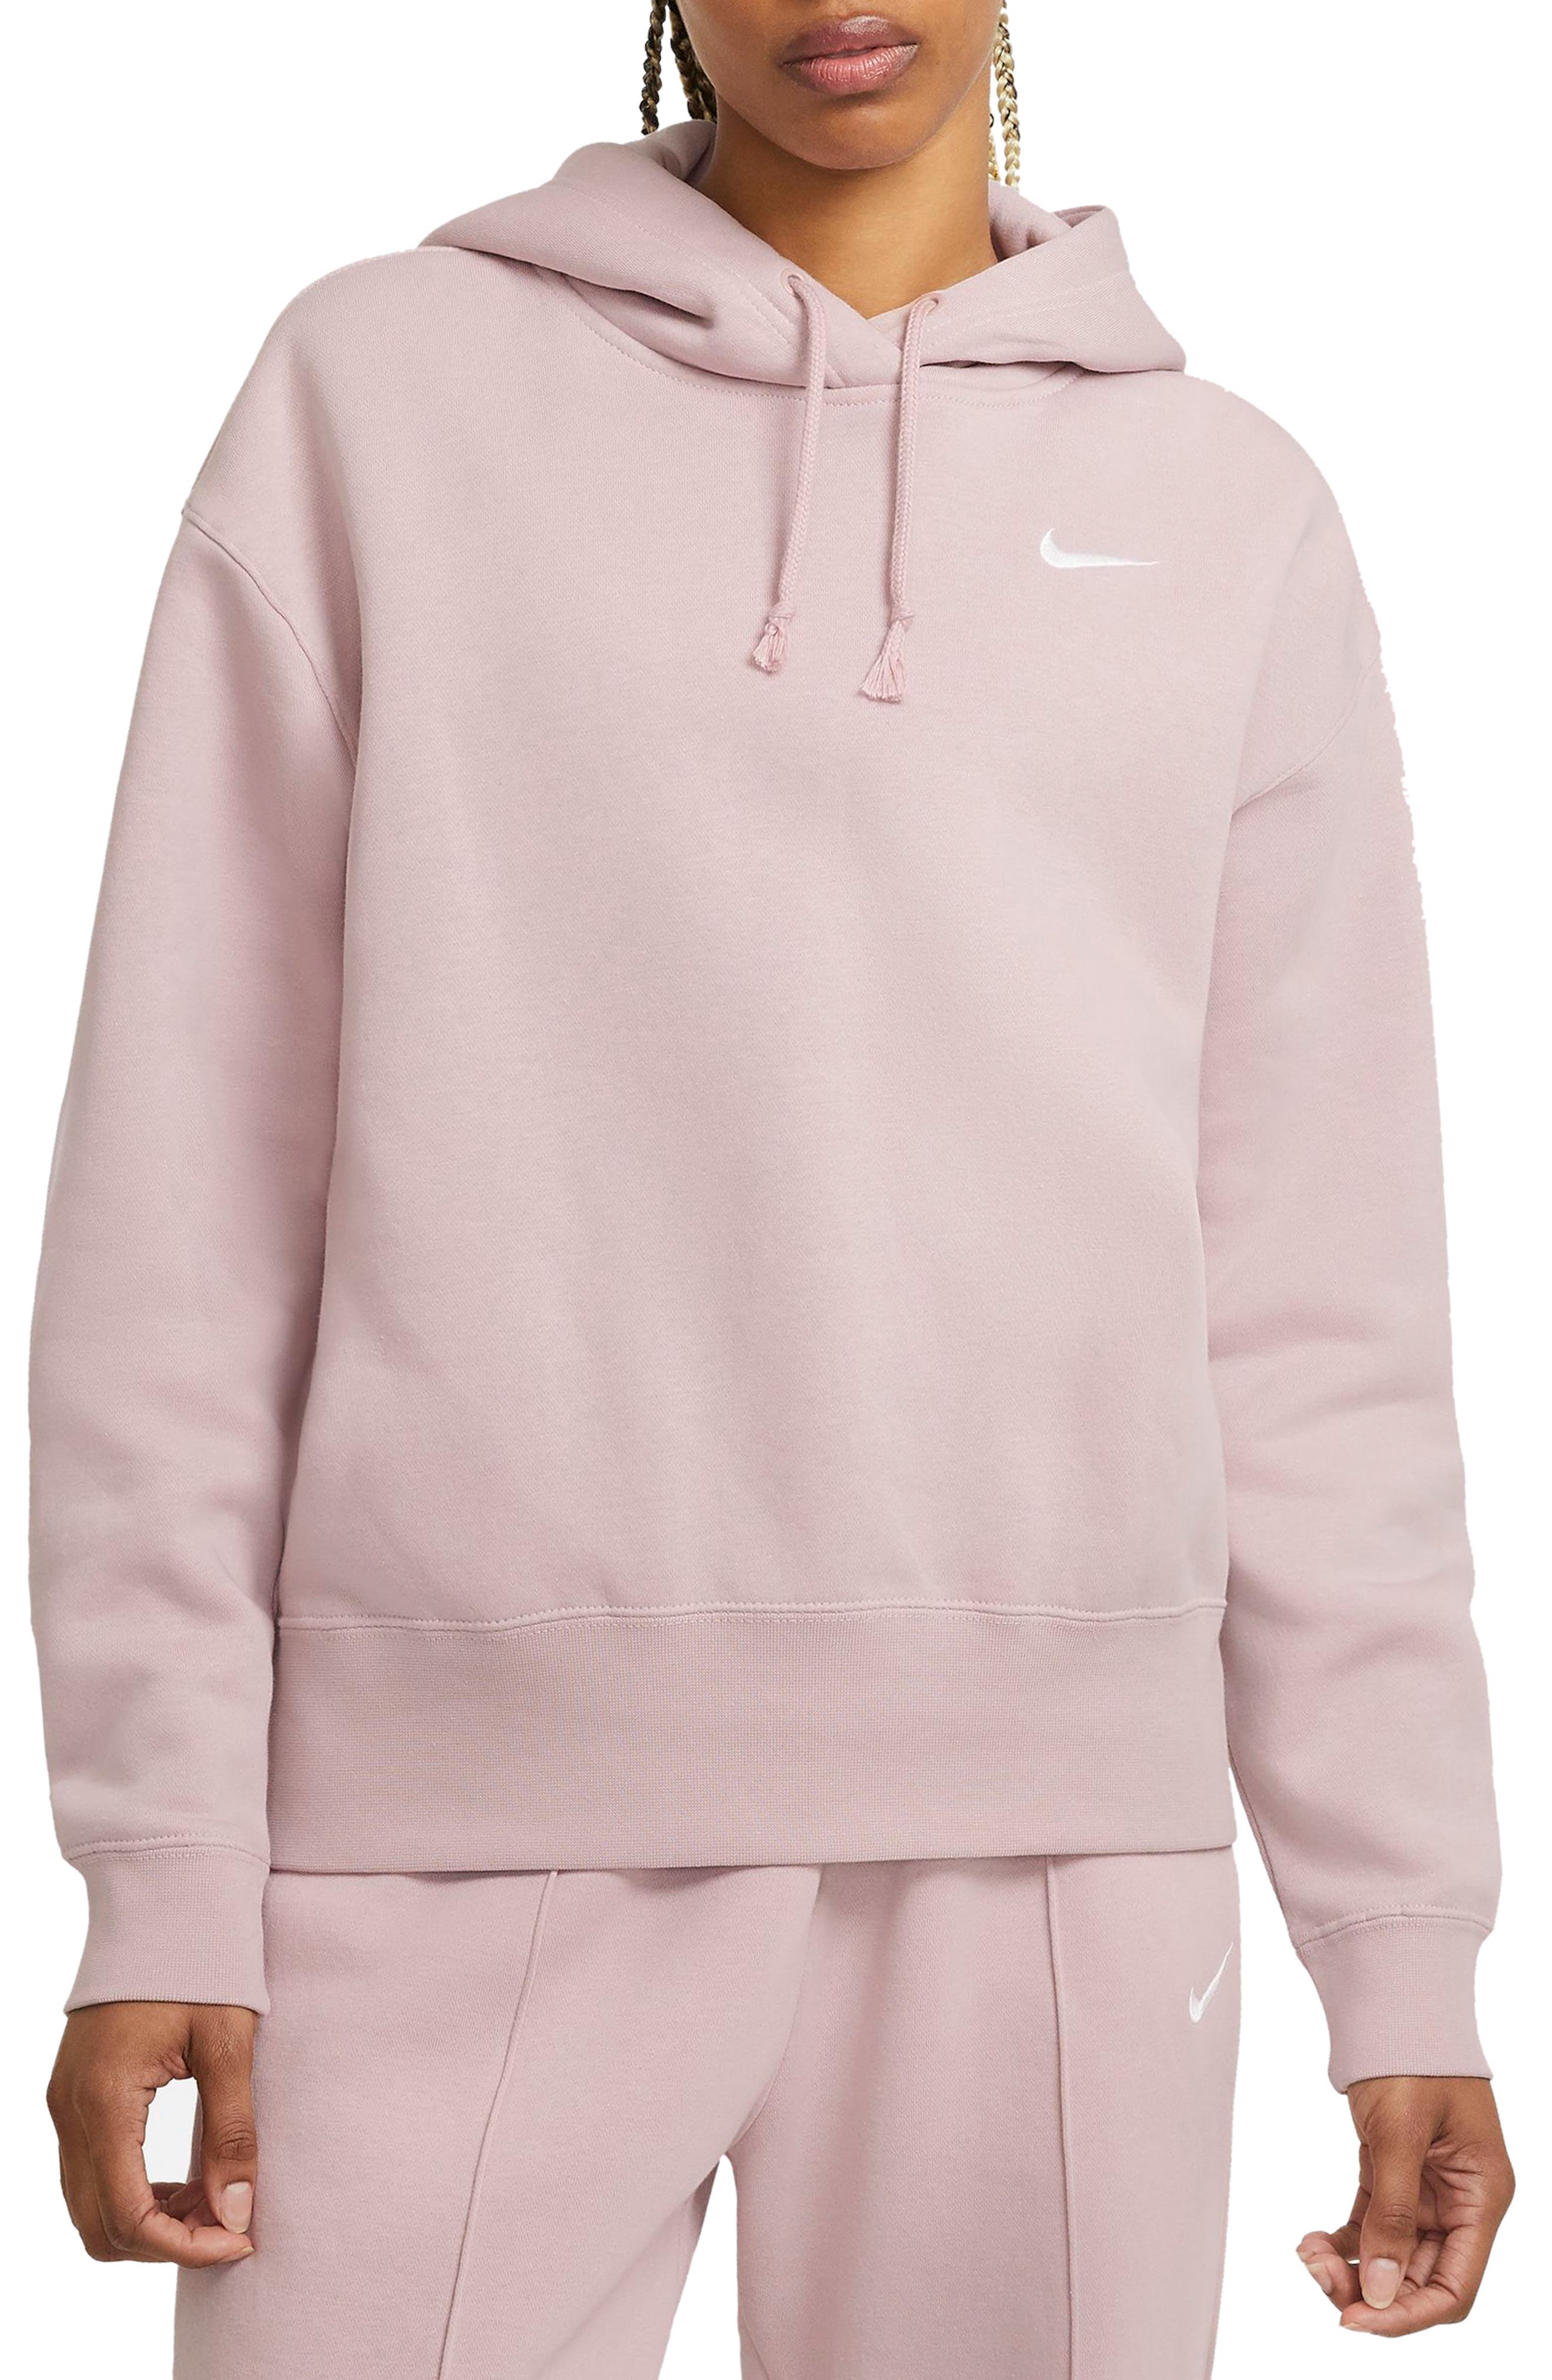 Women's Pink Nike Clothing | Nordstrom